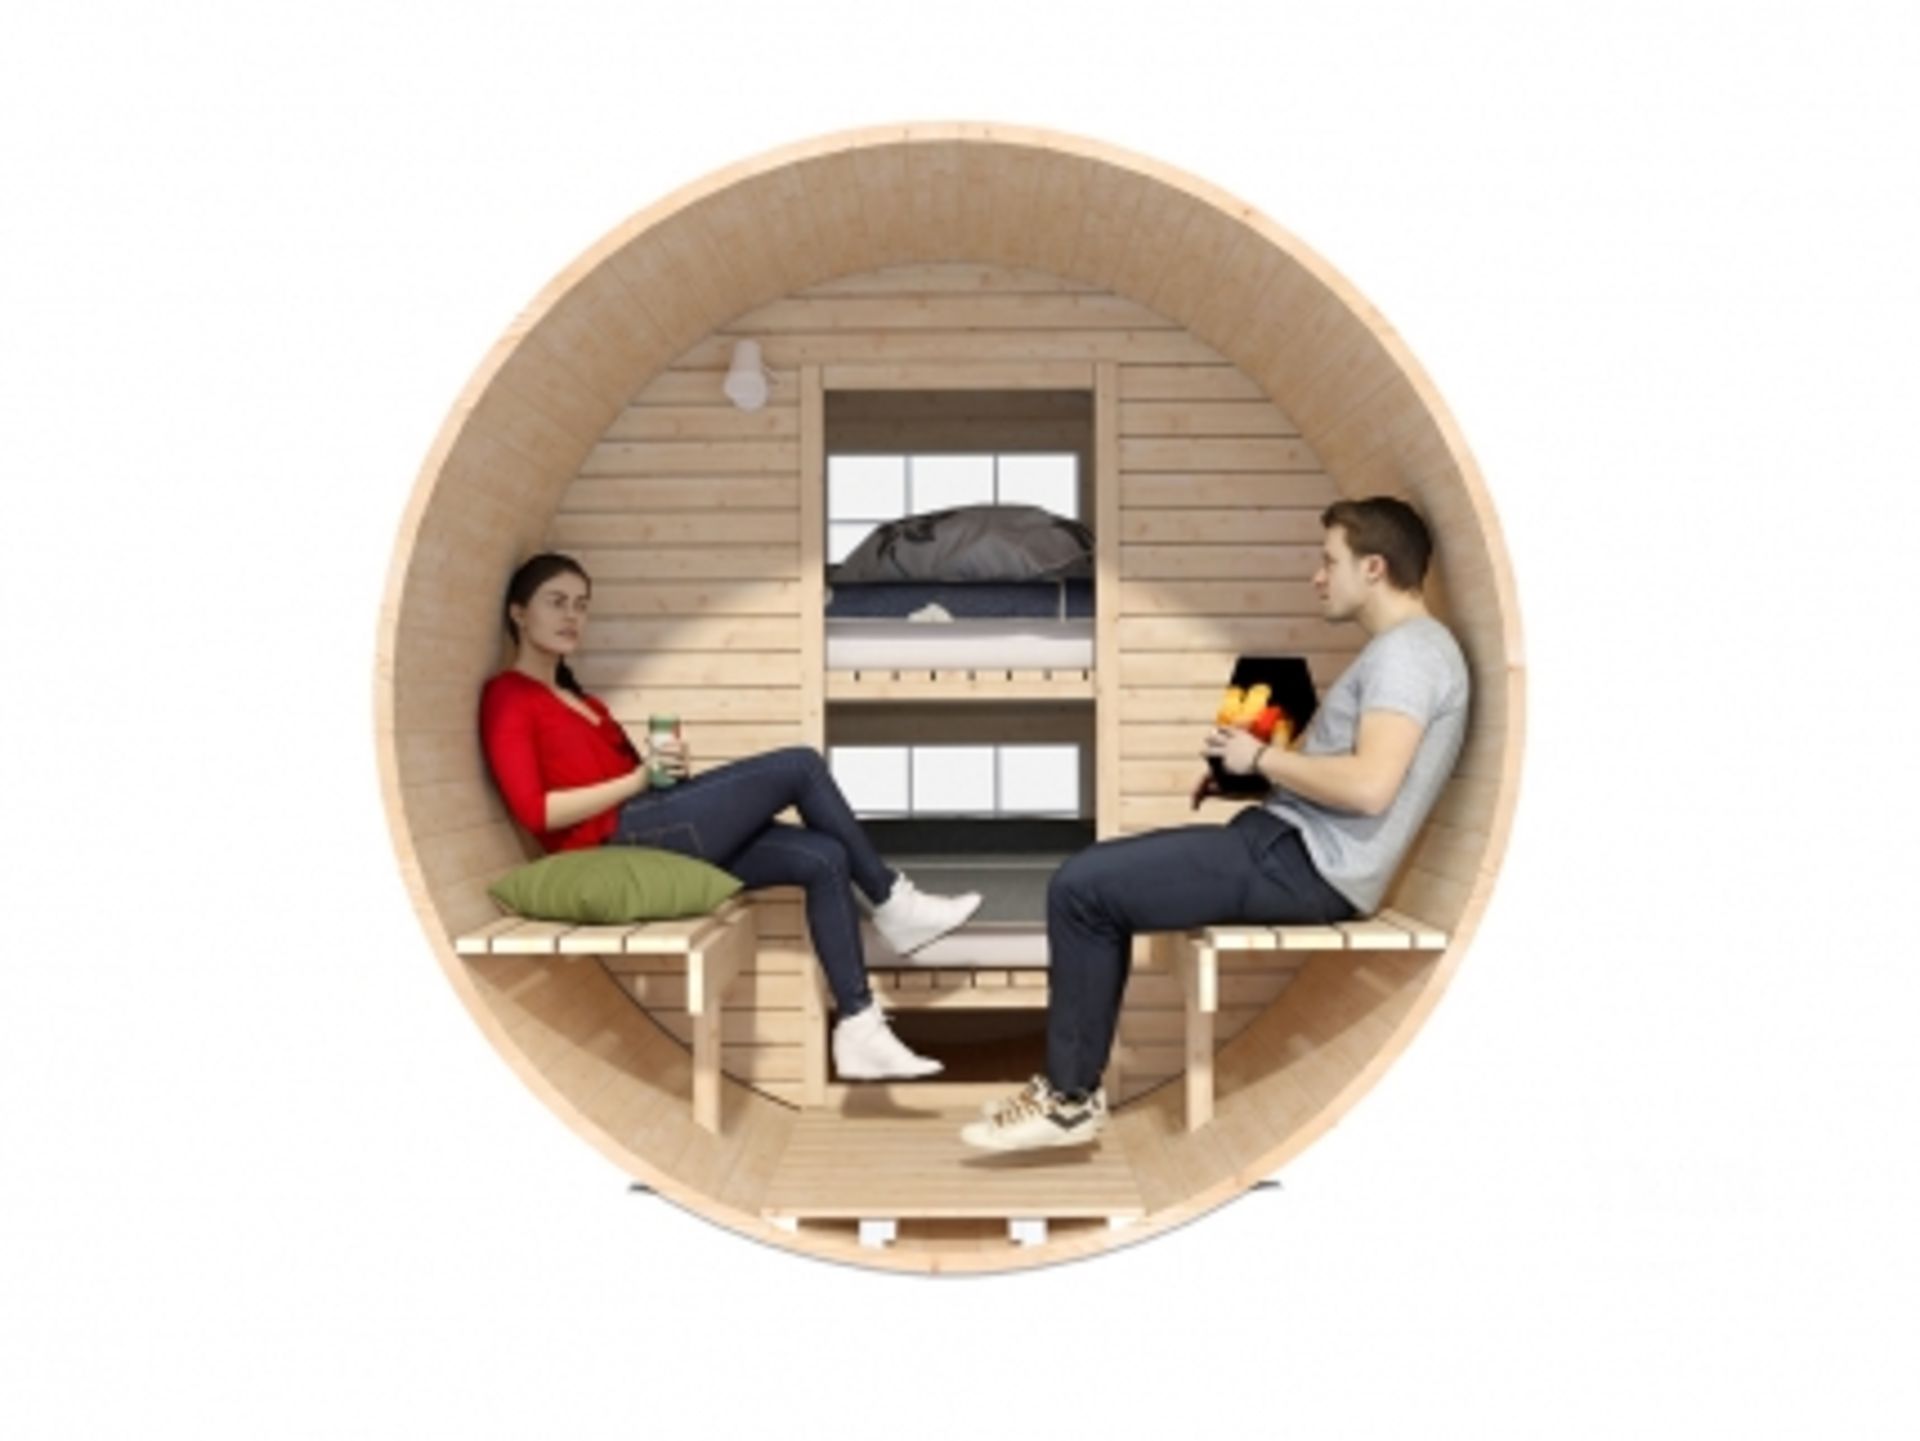 + VAT Brand New 2.2 x 3.3m Barrel For Sleeping - Sleeping & Sitting Rooms Inside - Sleeping Room - Image 2 of 4